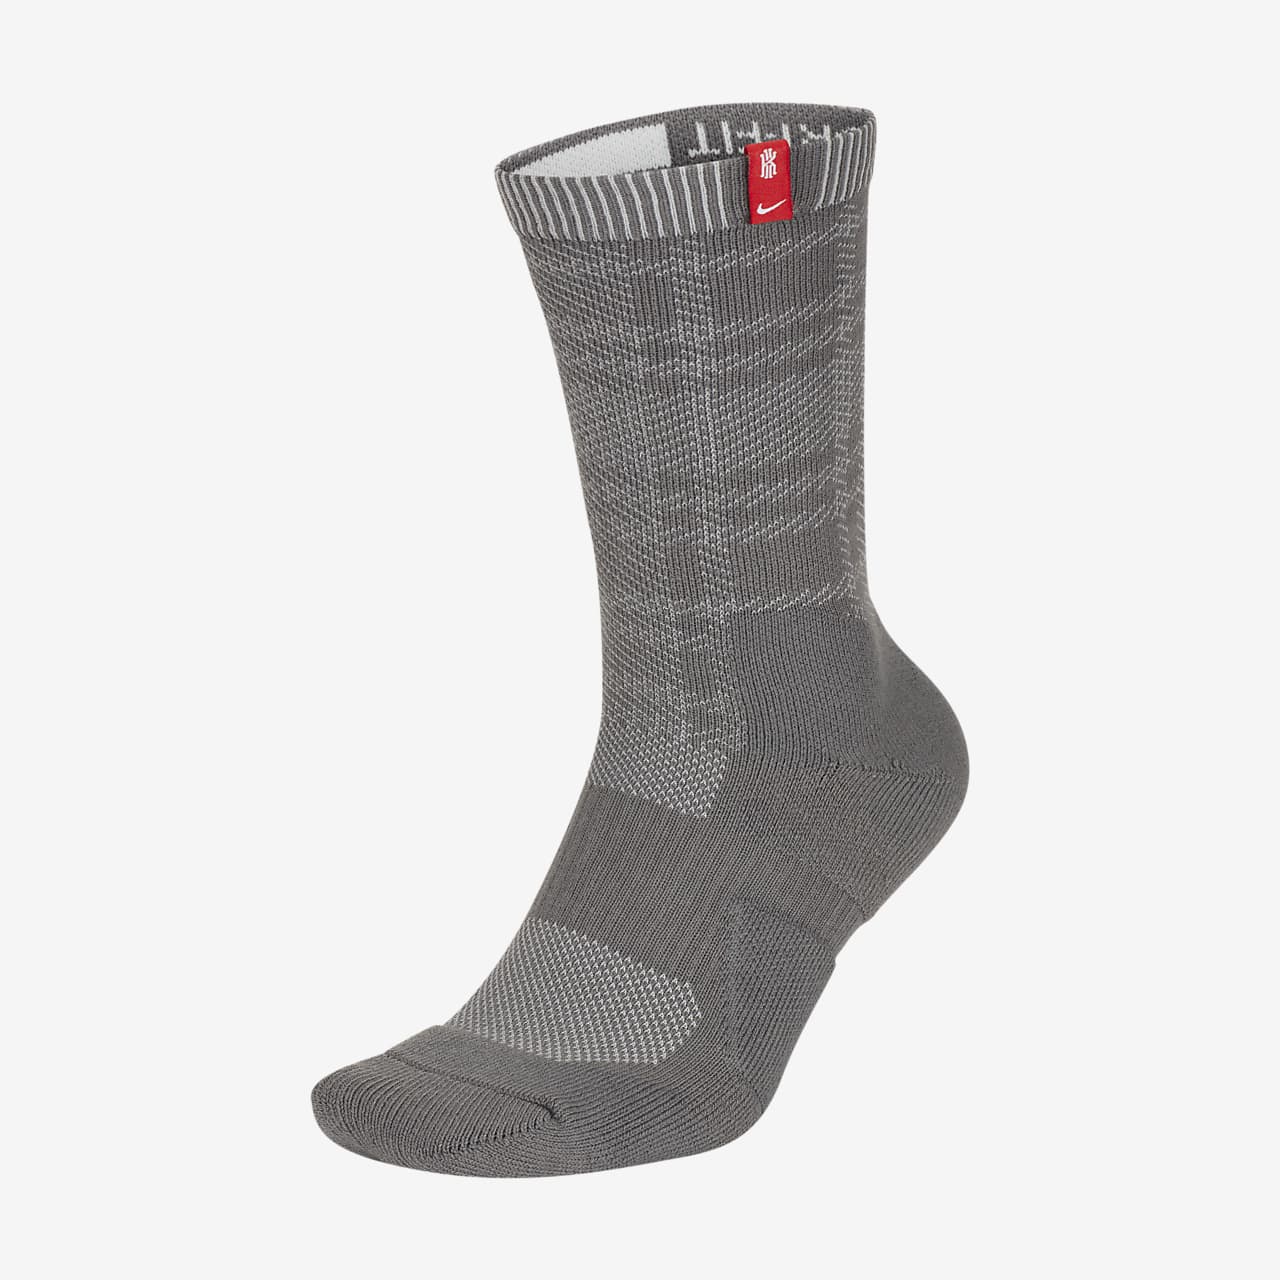 elite socks kyrie